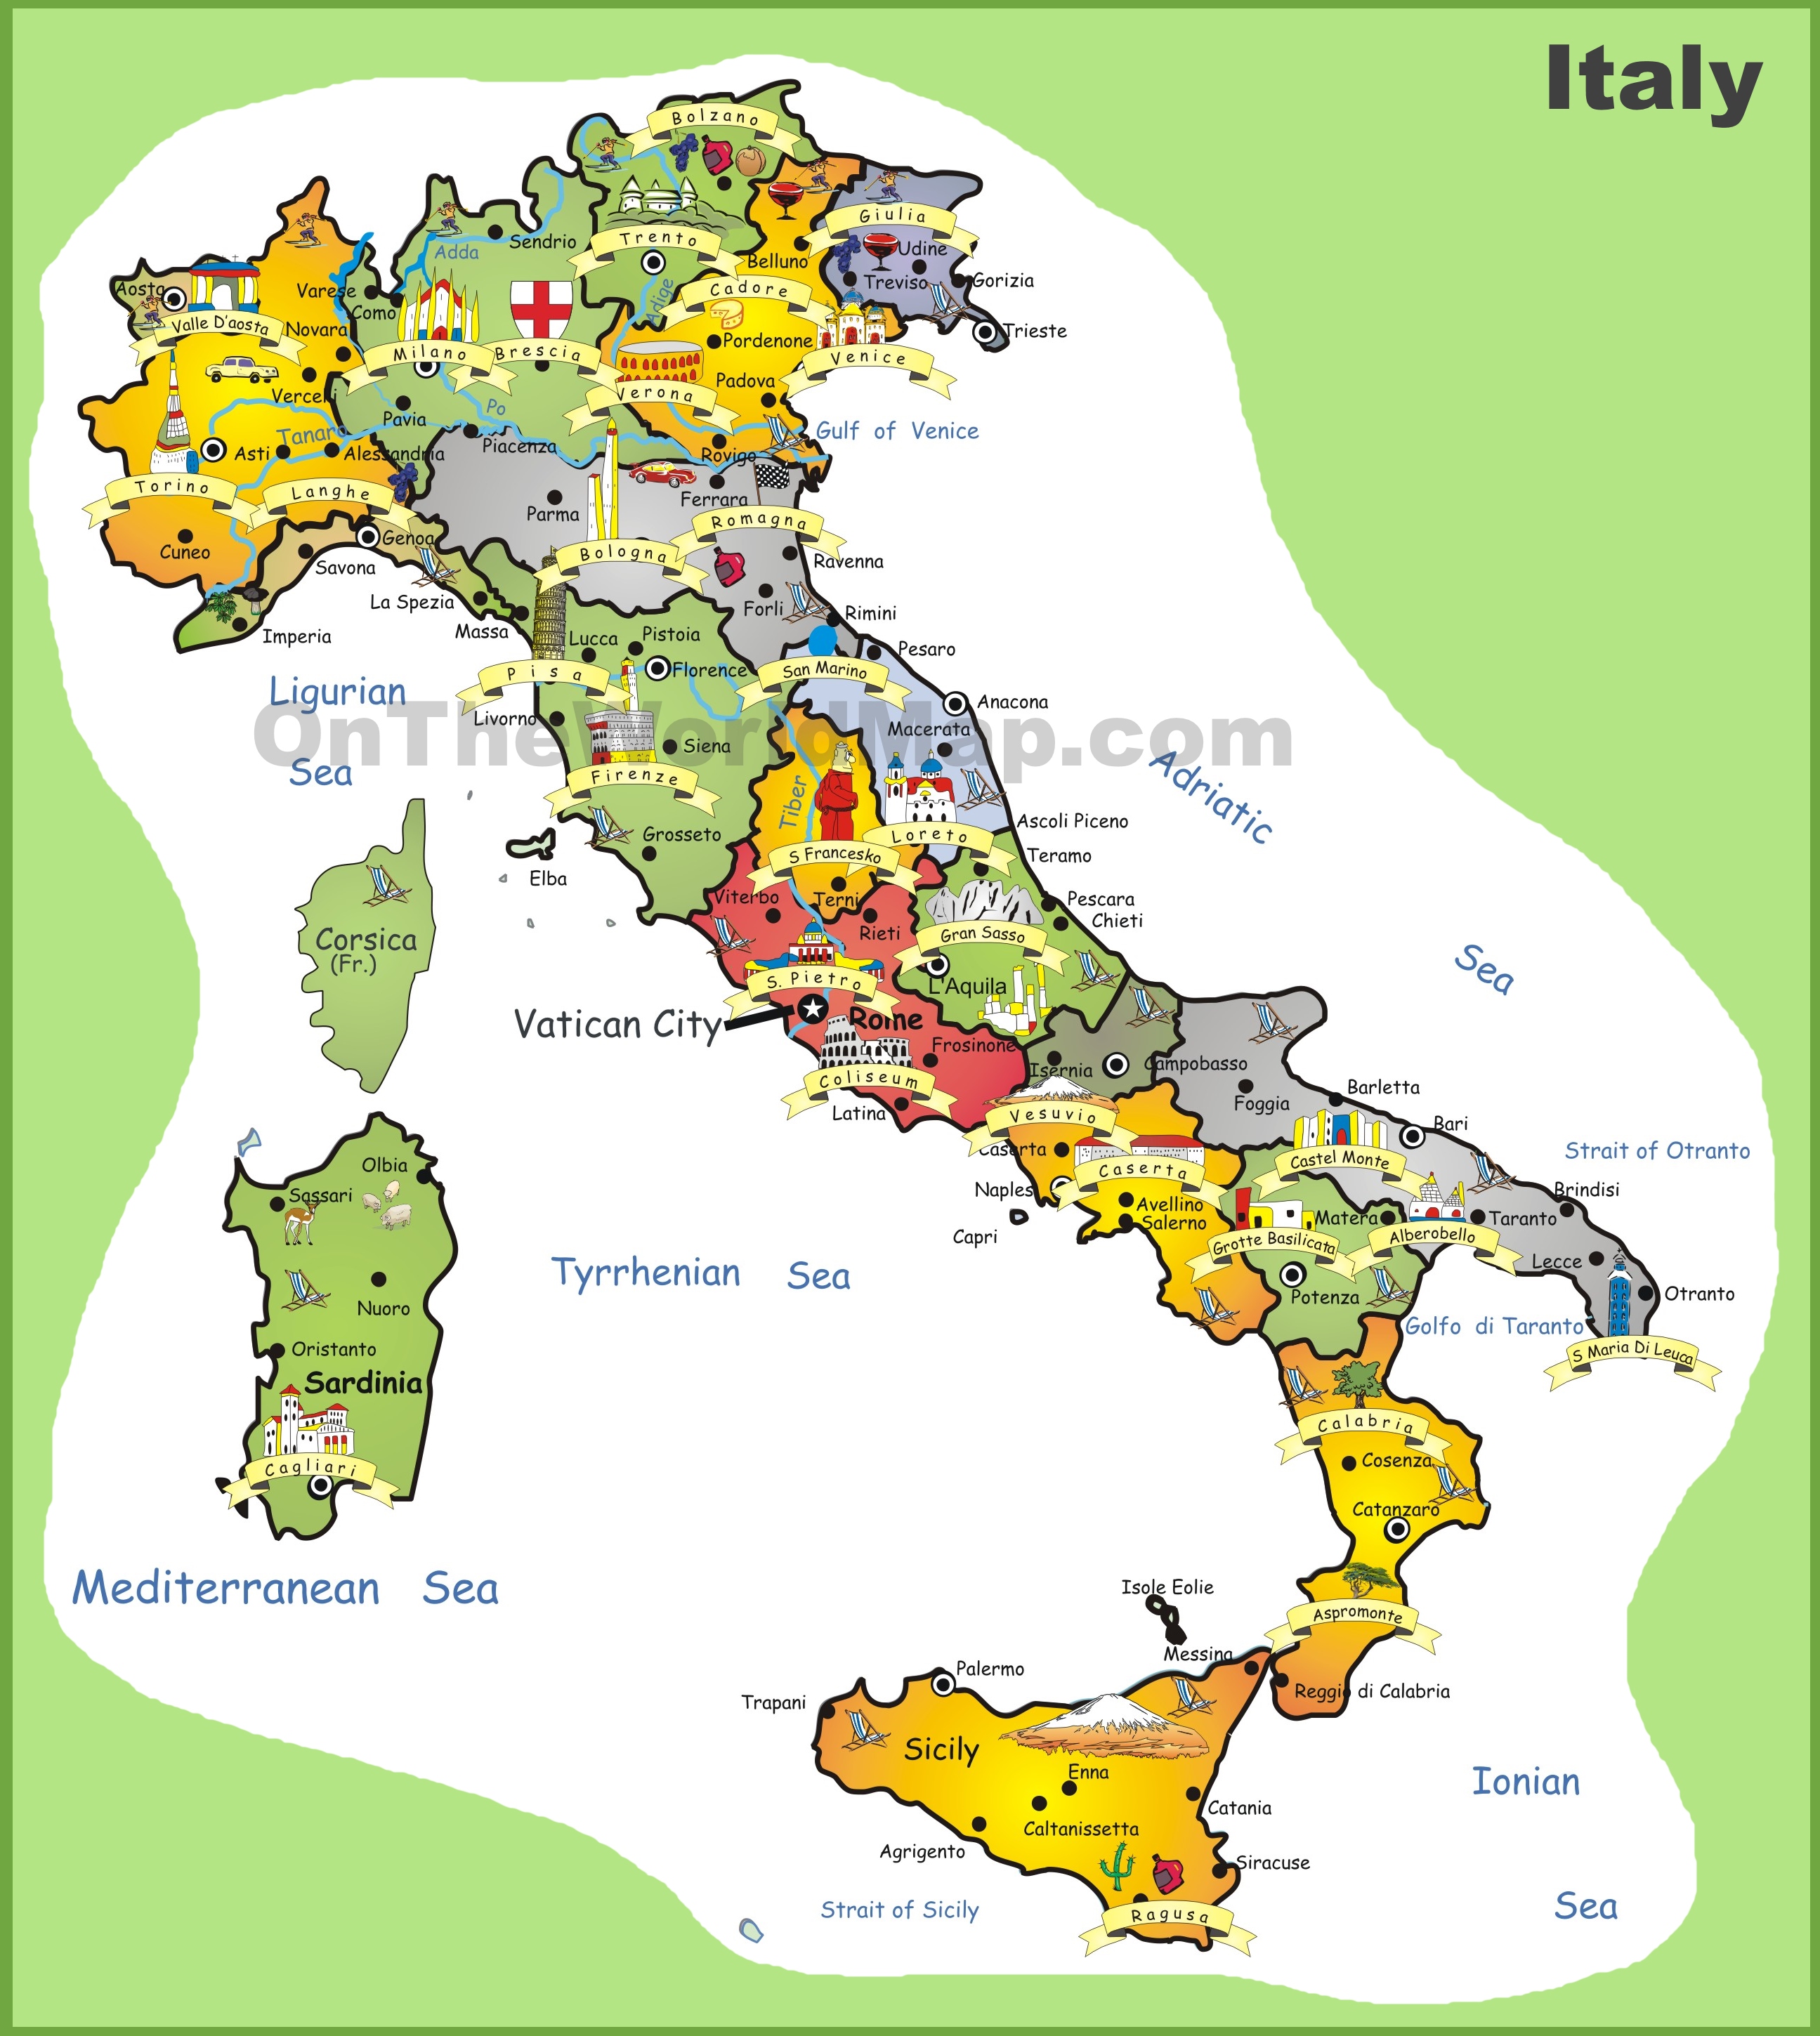 Italy Tourist Map